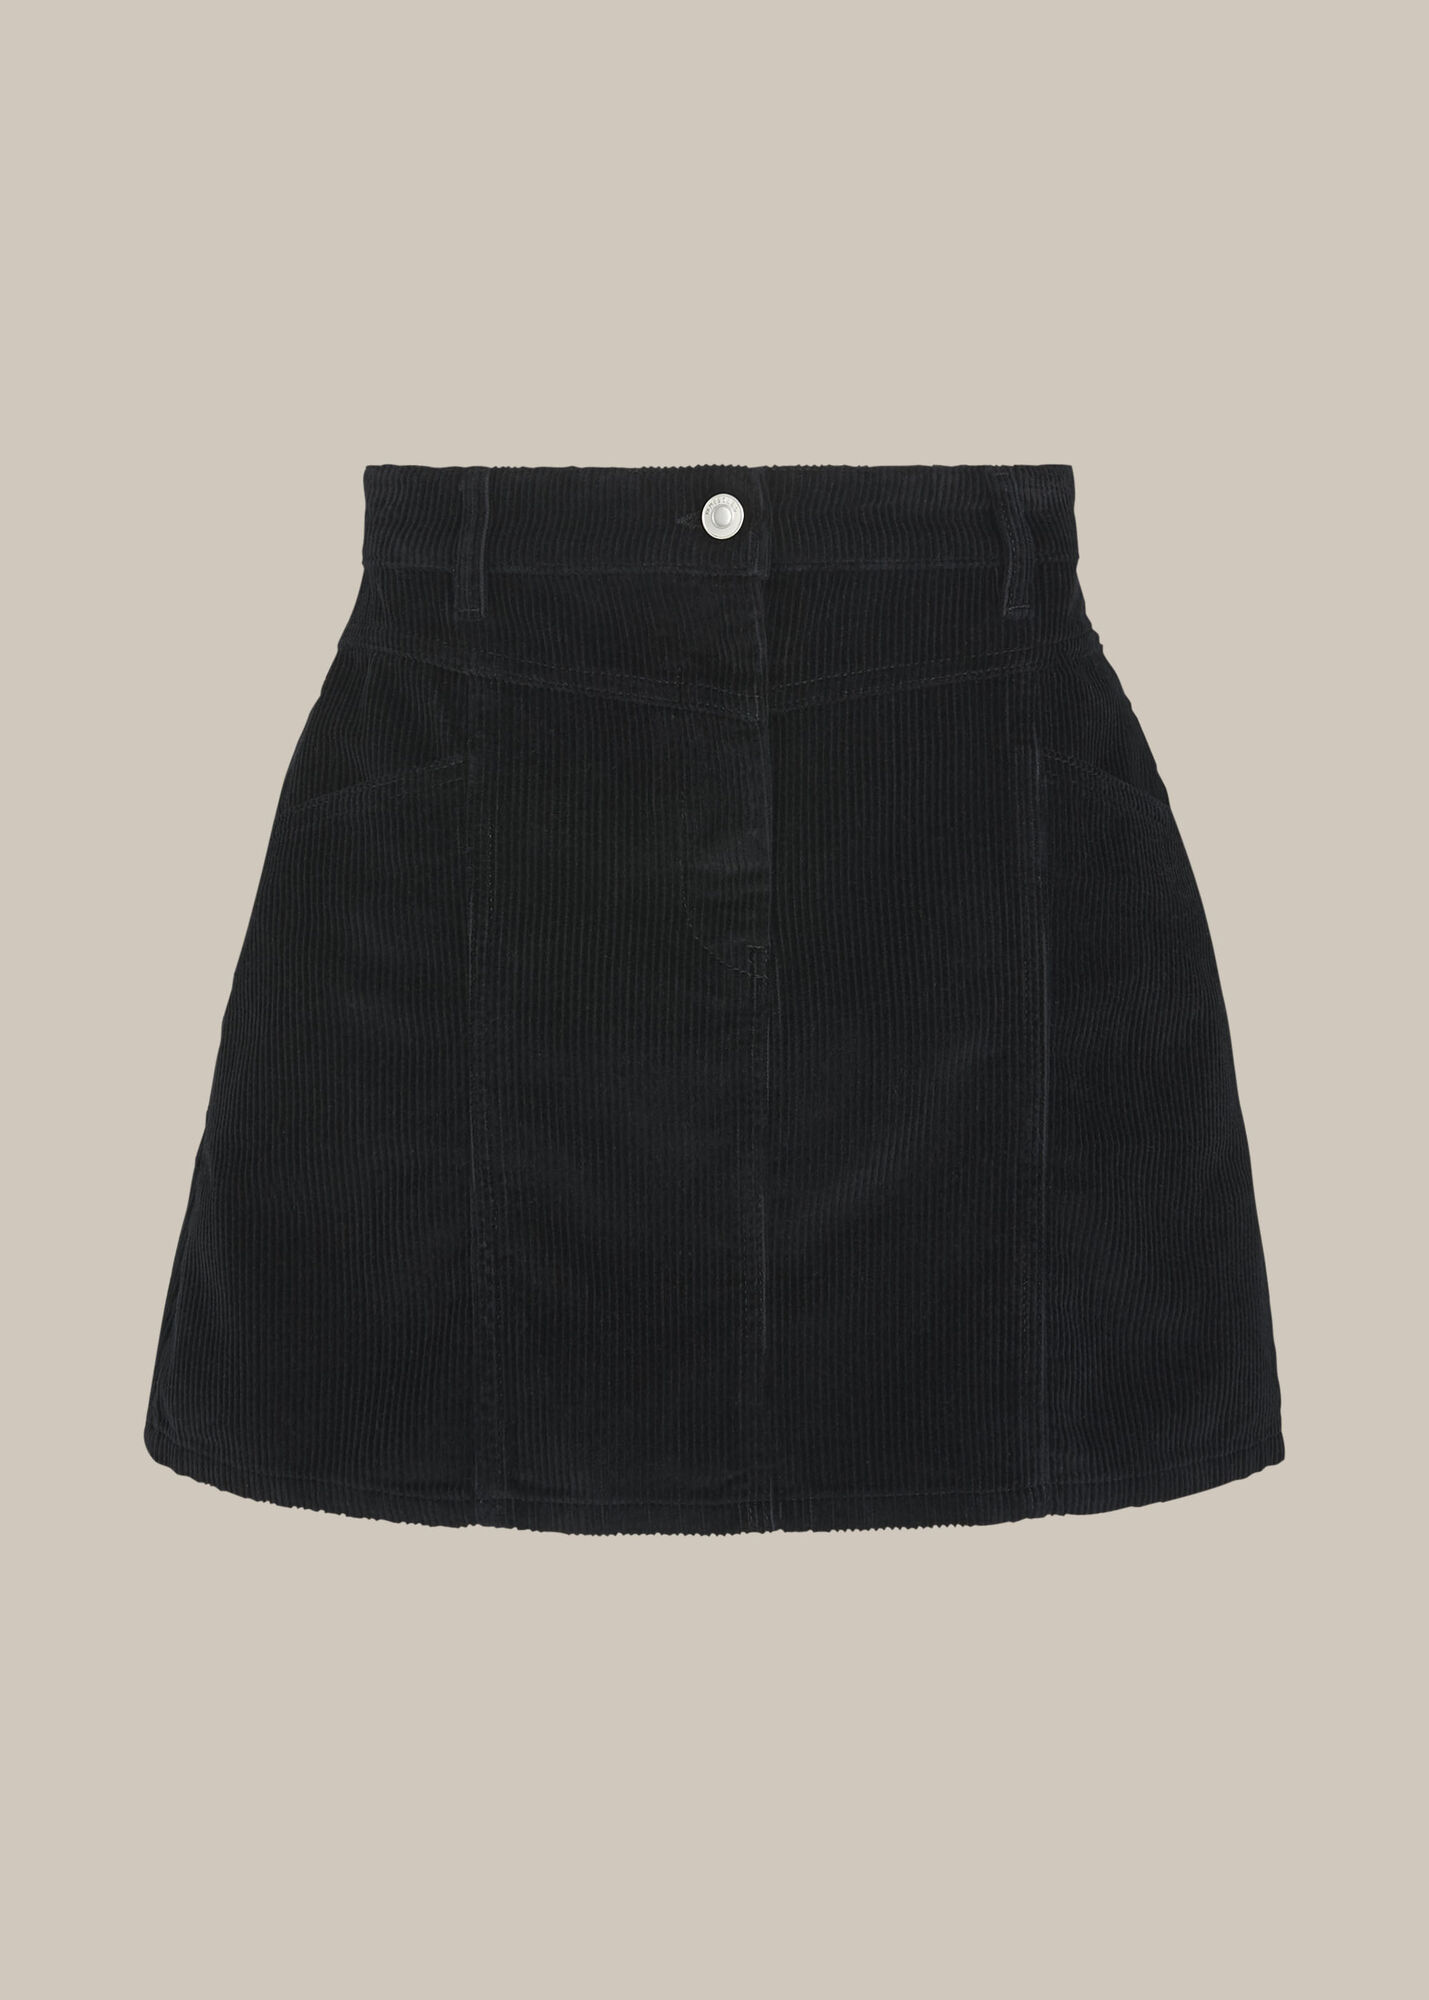 Black Cord A Line Skirt | WHISTLES